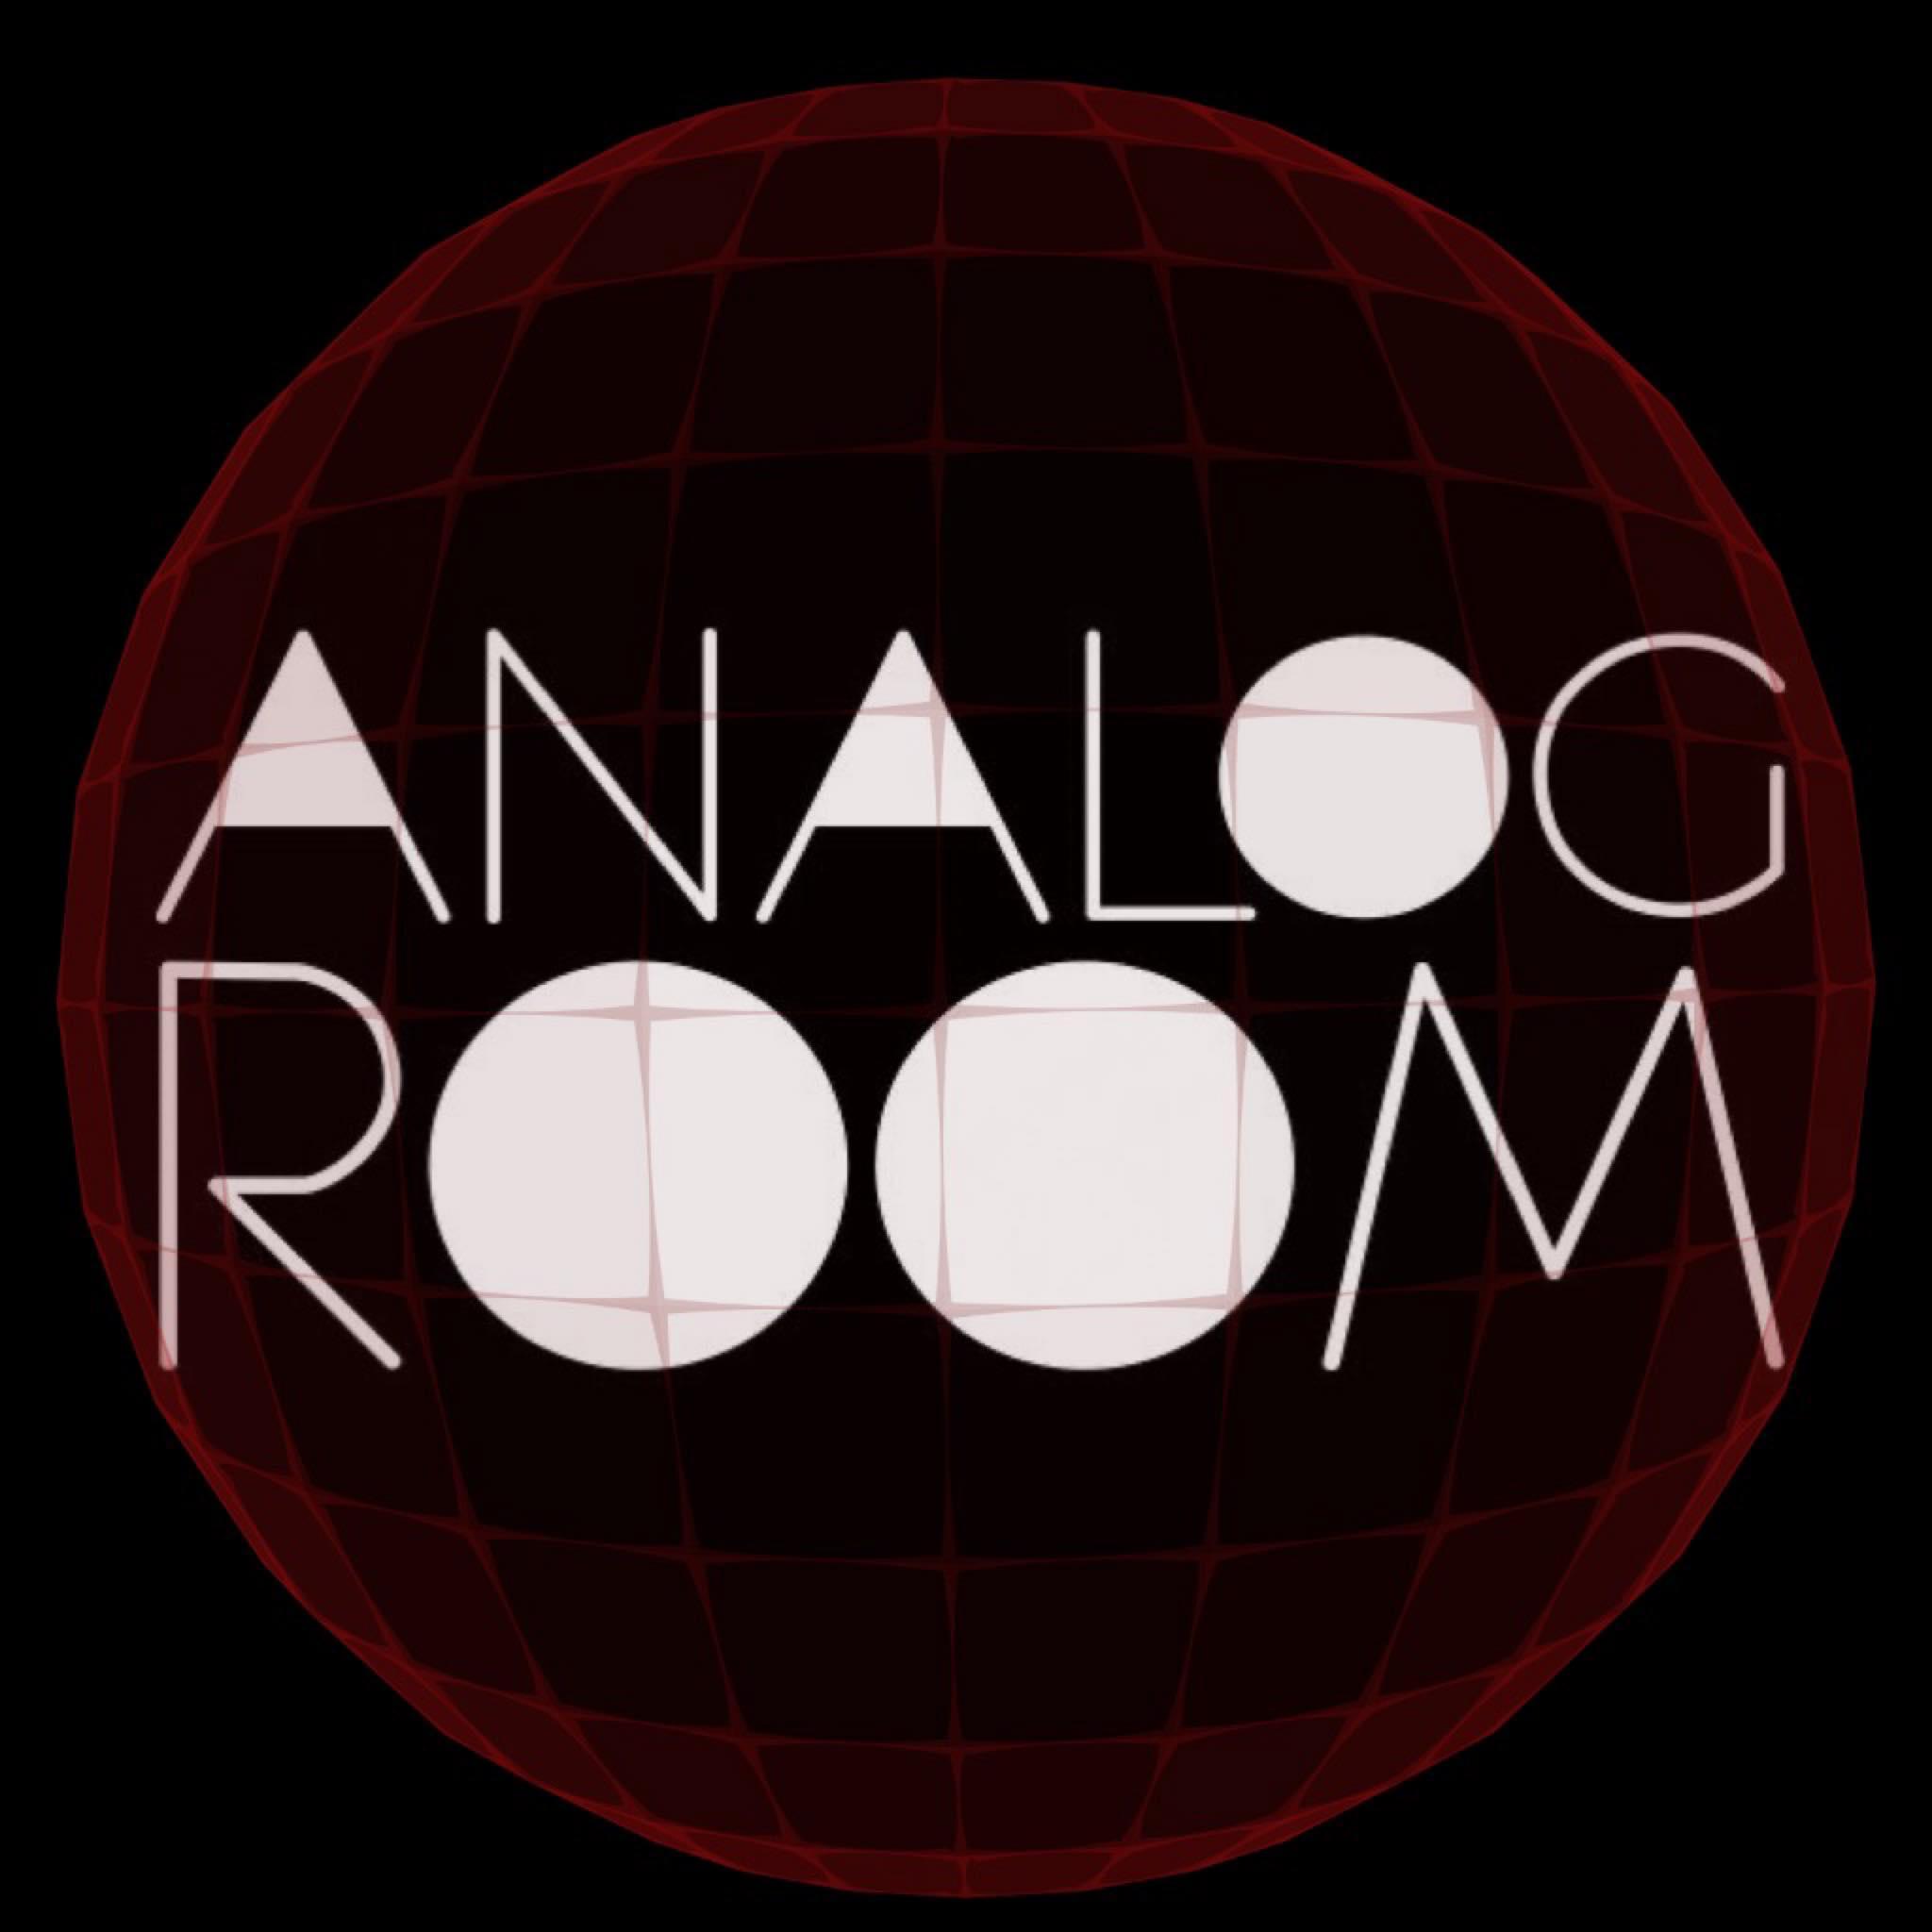 Analog Room pres. Shemroon 5 Hours Extended Set